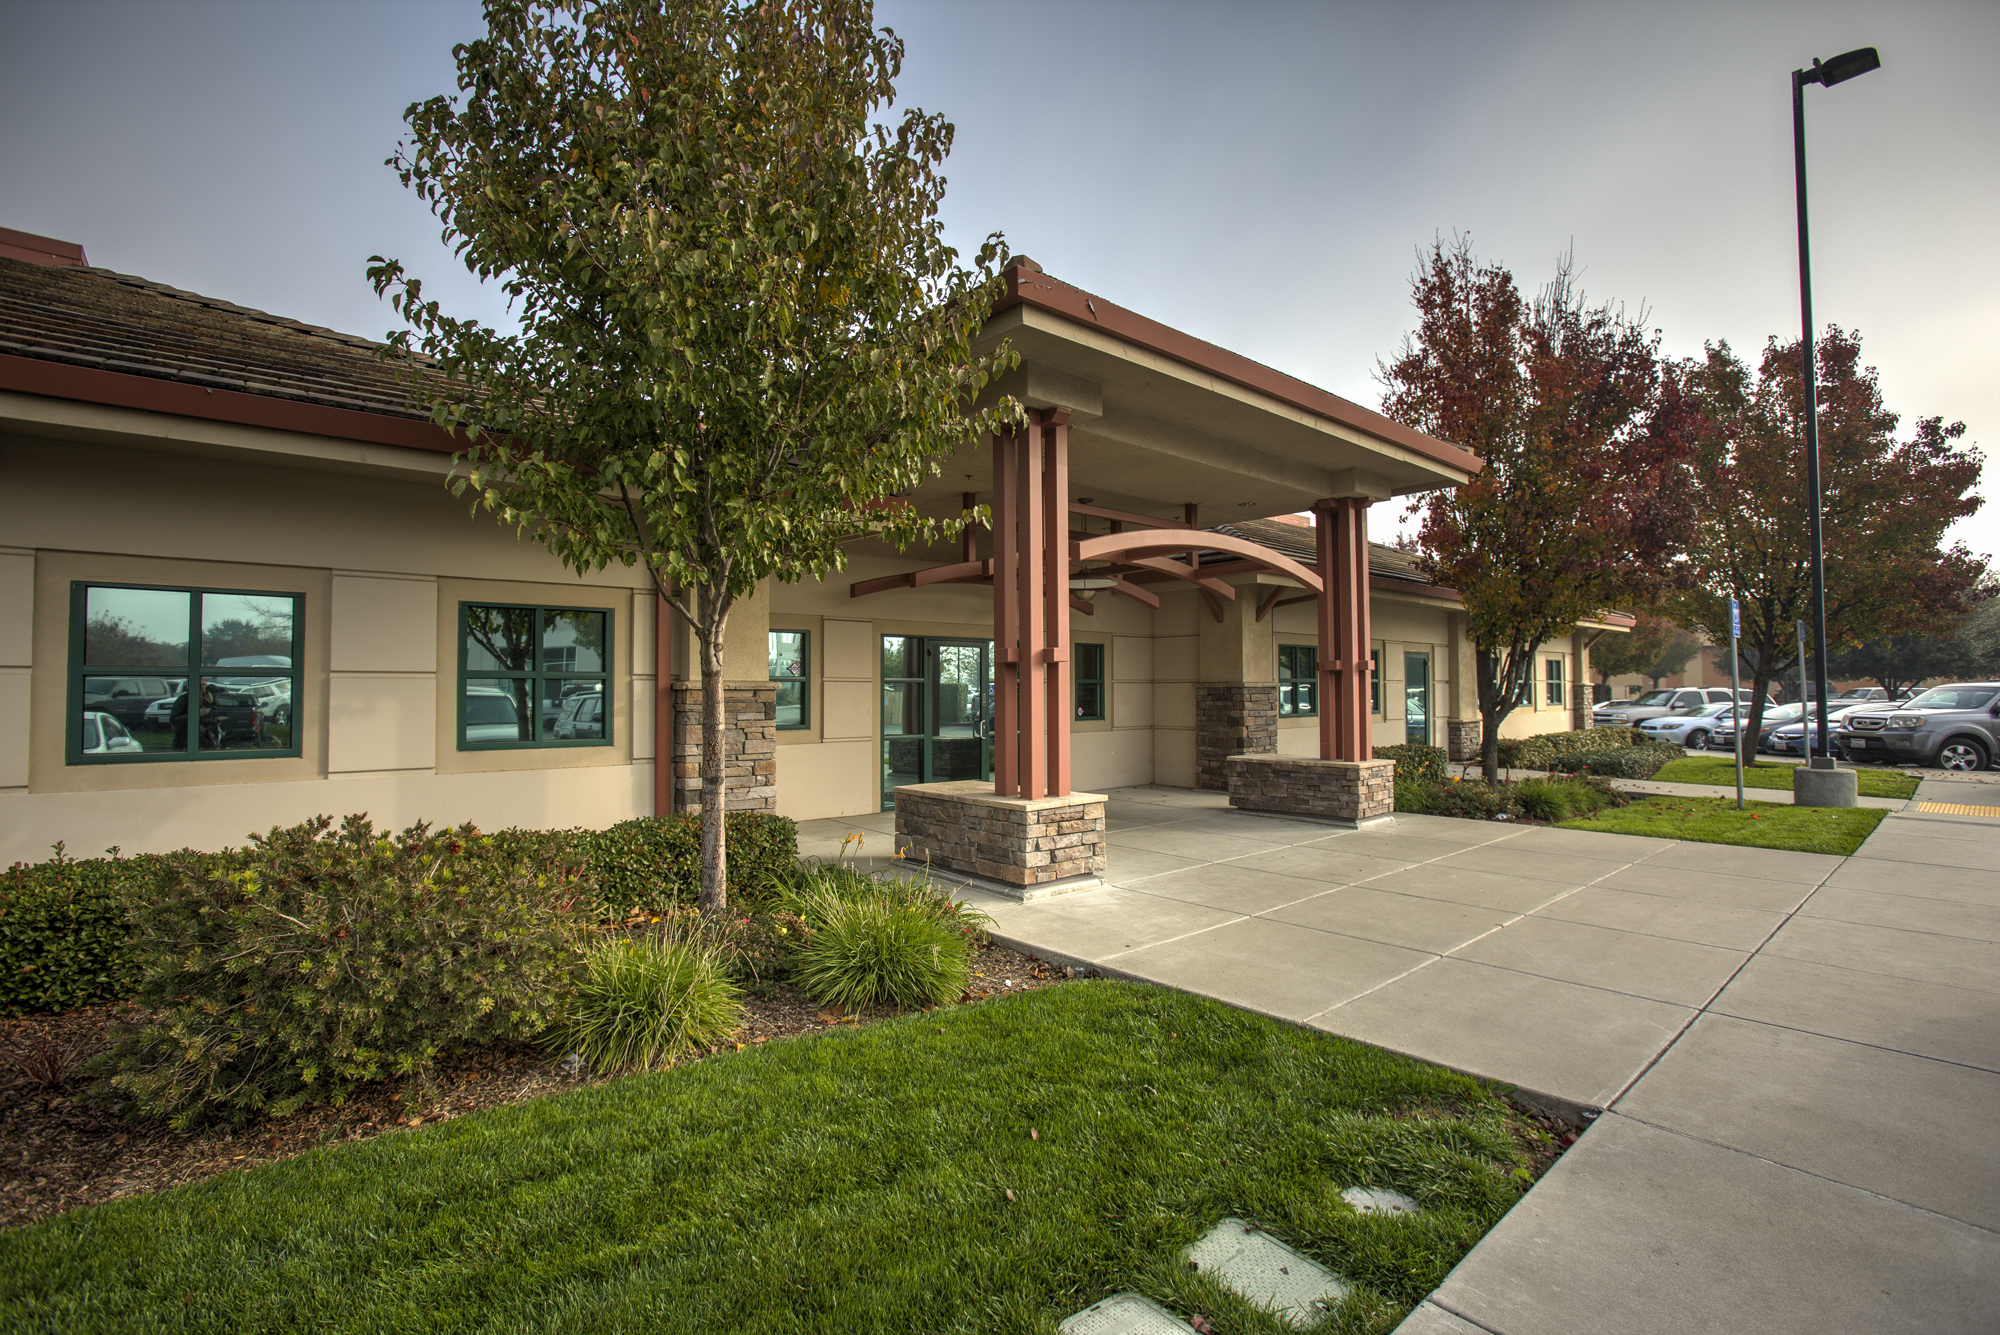 Little-Blossom-Montessori-Preschool-and-Daycare-Services-Sacramento-Natomas_08.jpg